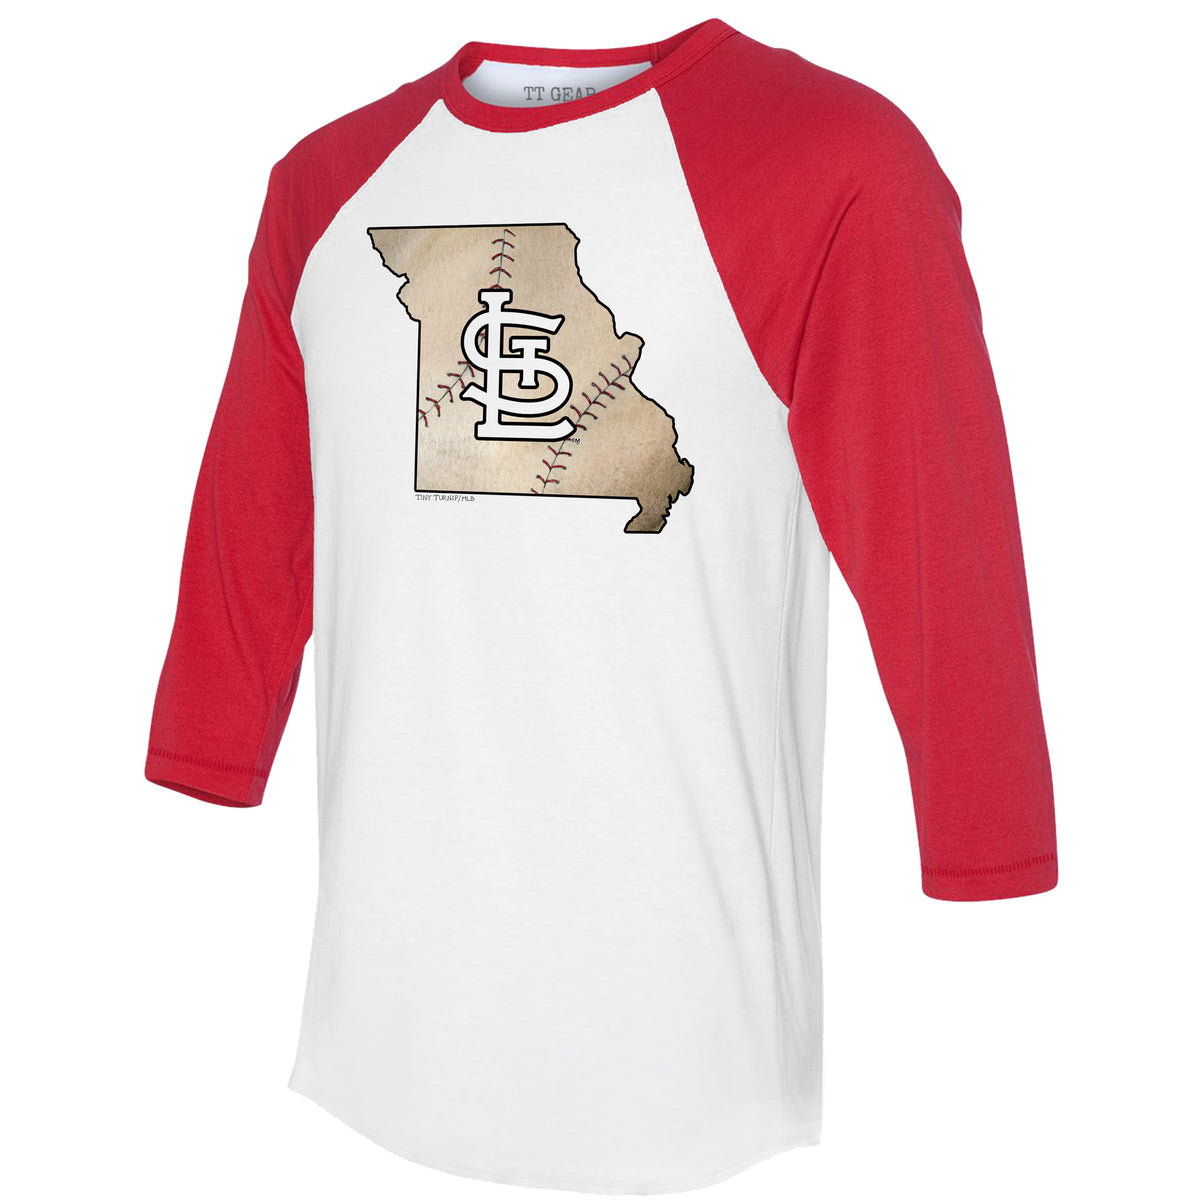 Toddler Tiny Turnip White St. Louis Cardinals TT Rex T-Shirt Size: 2T